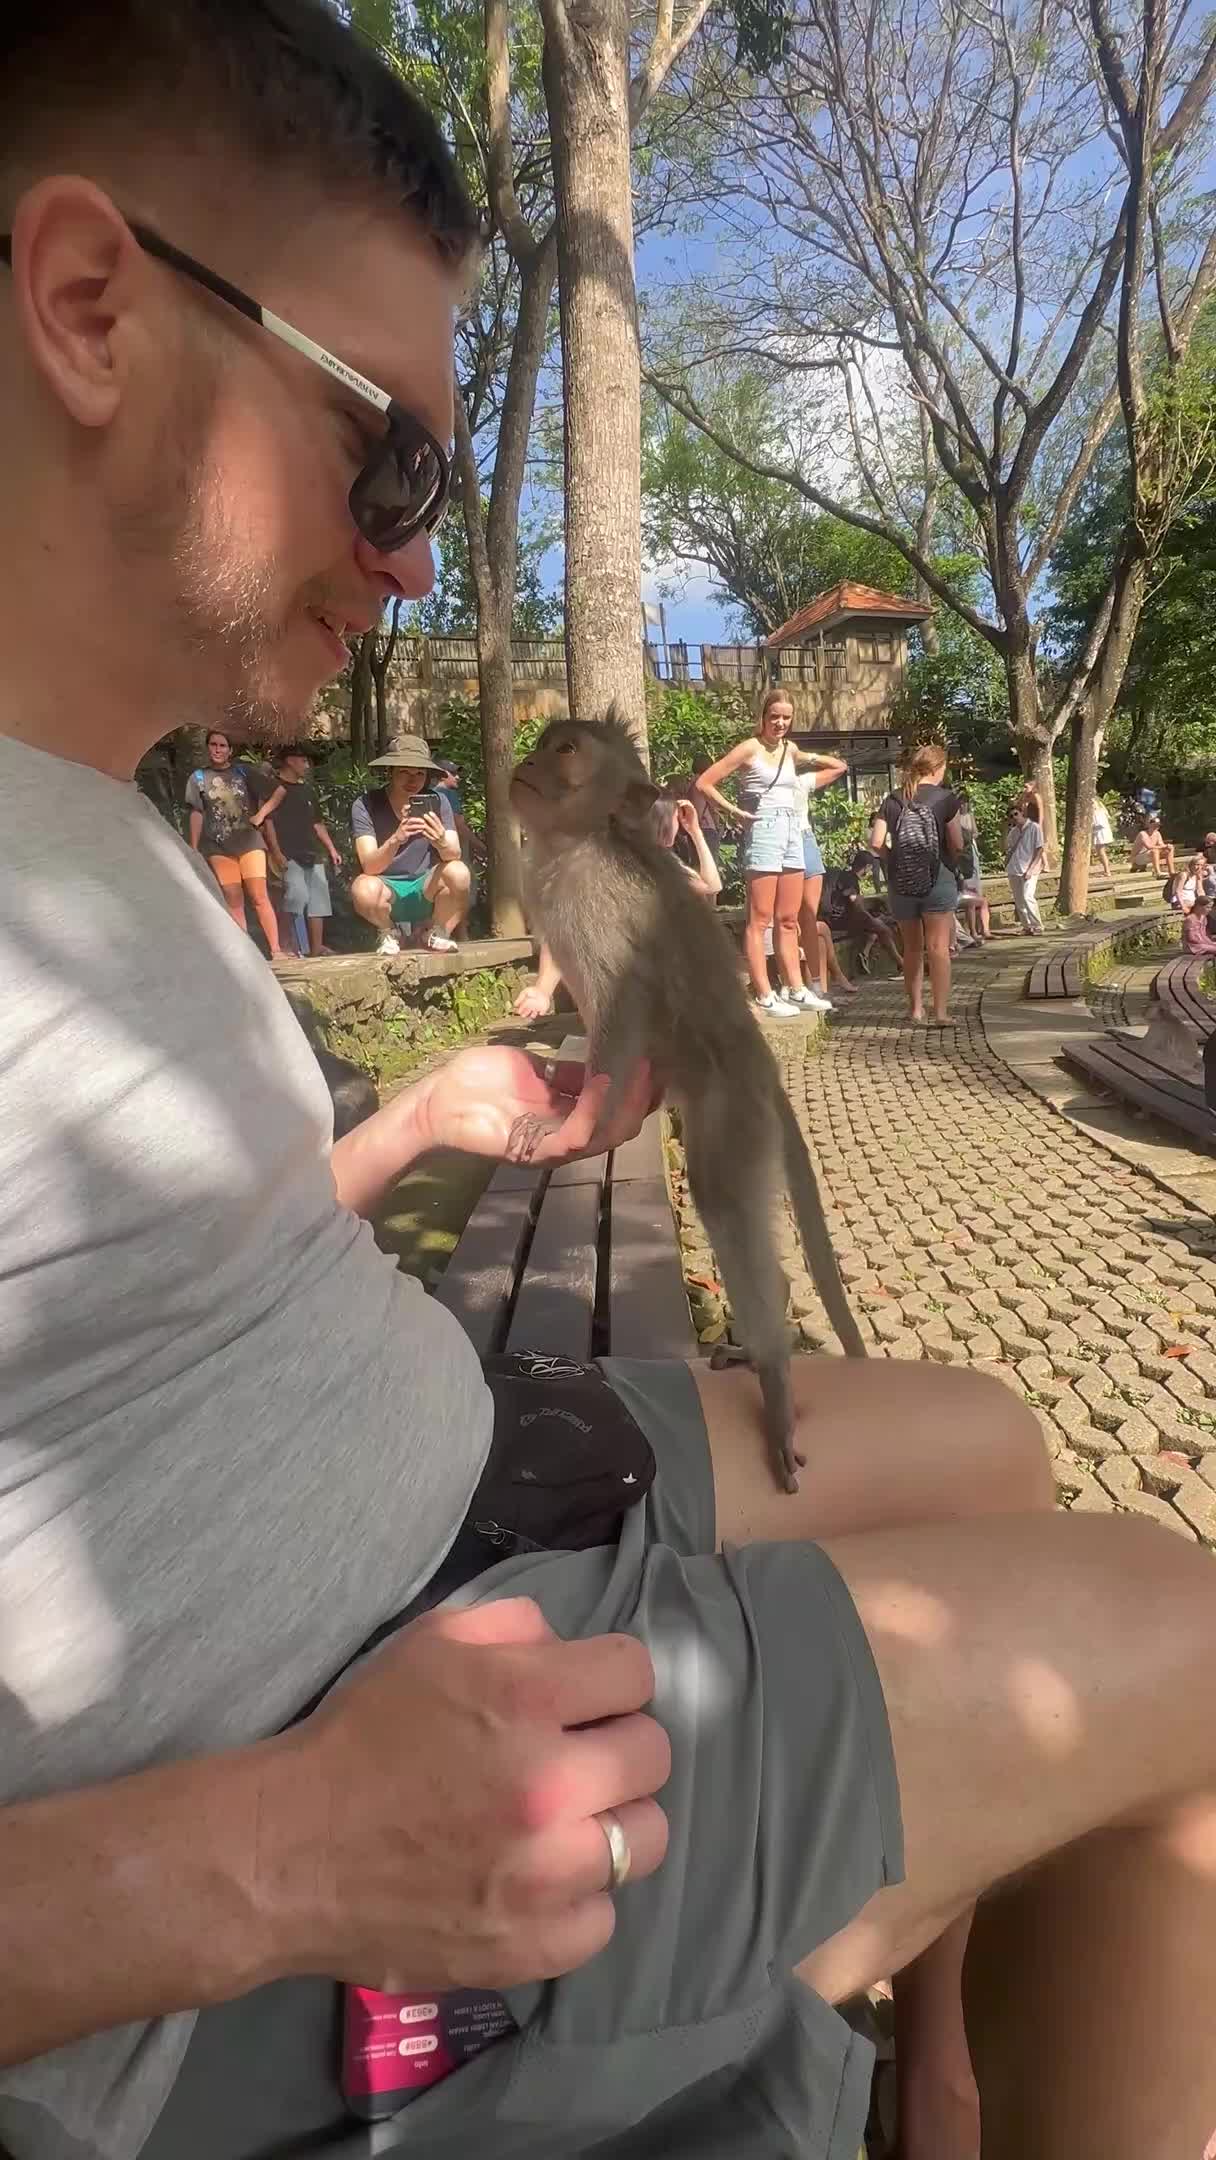 Monkey Scratches Guy's Nose at Monkey Park